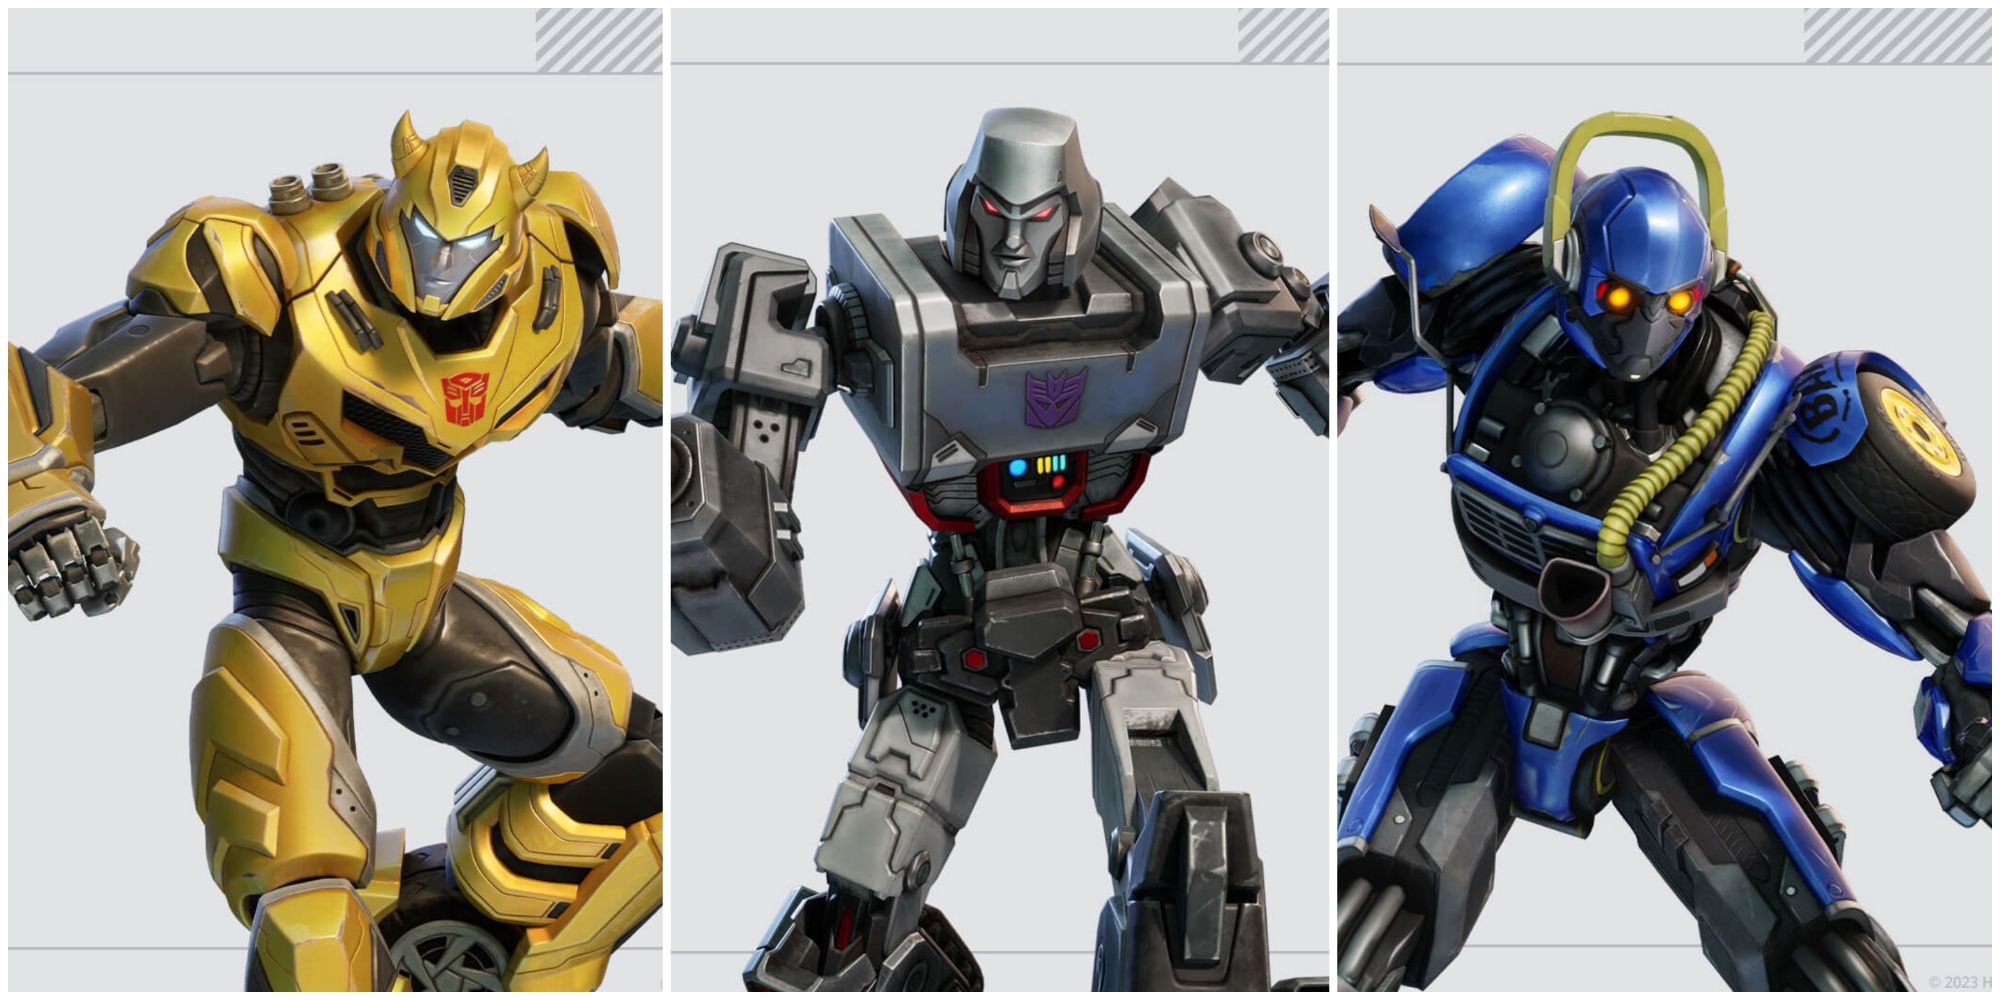 Fortnite: Transformers Legends - Xbox Series X|S/Xbox One